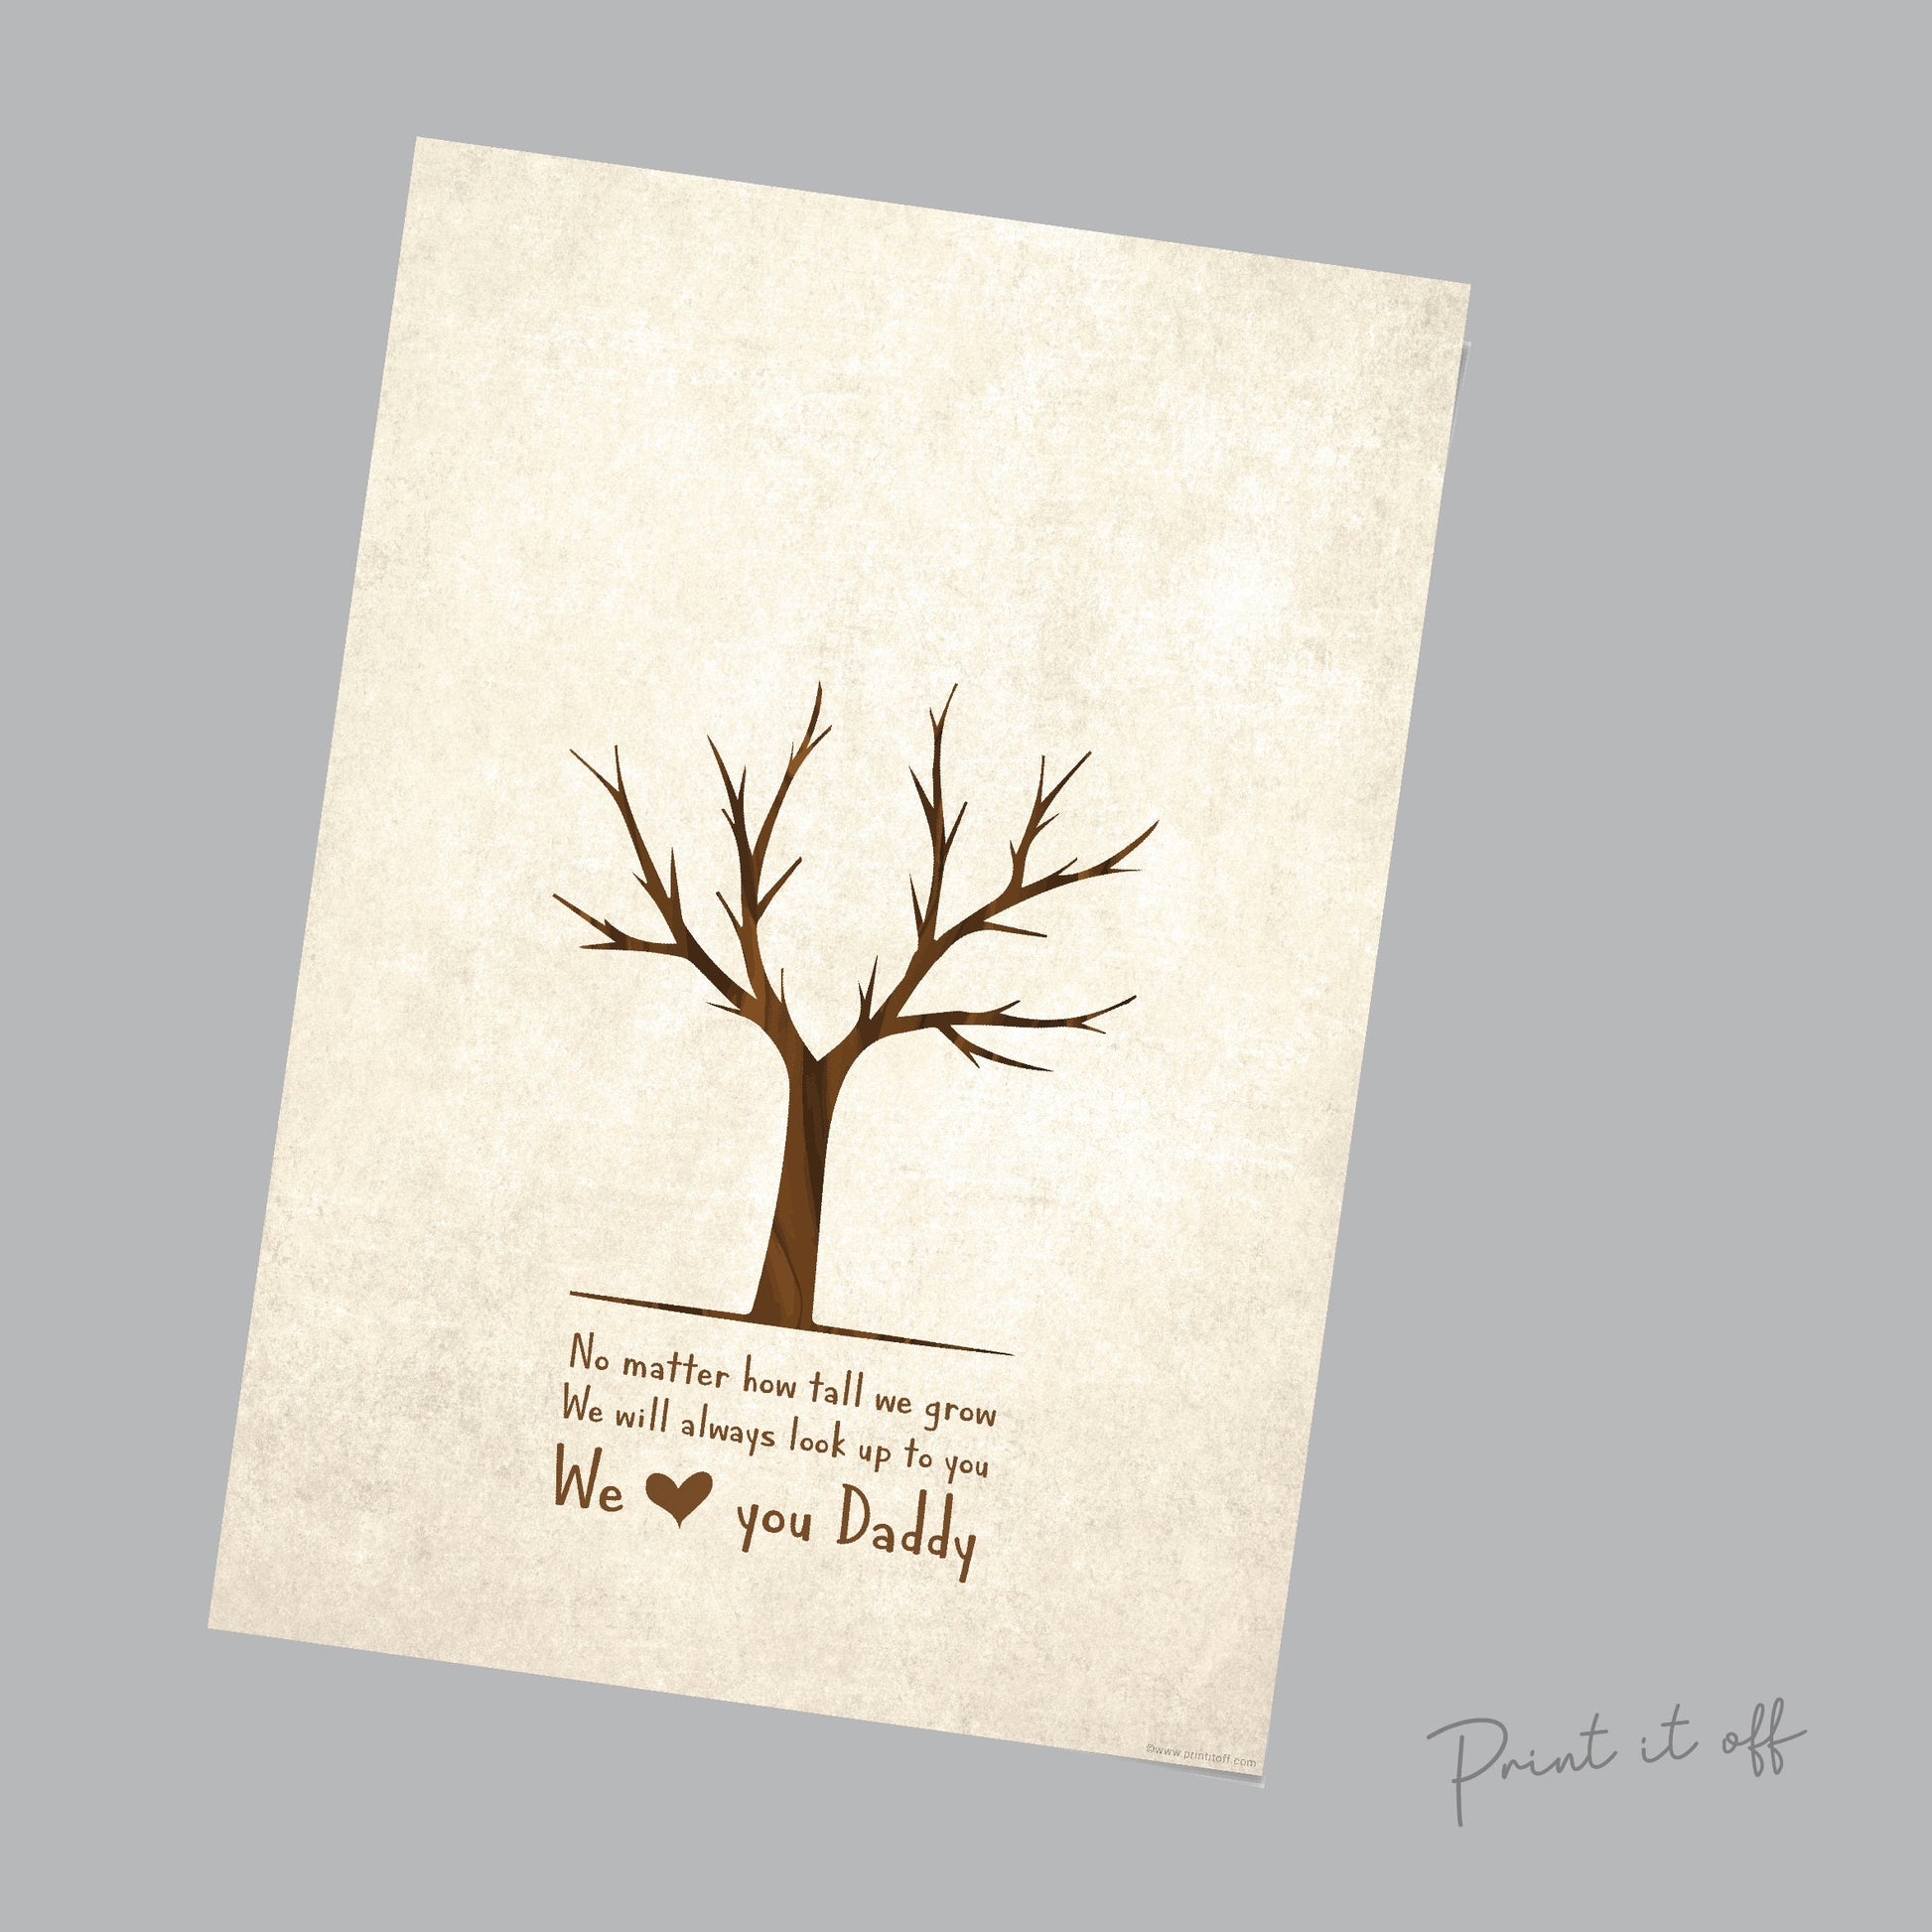 We Love You Daddy Tree / Handprint Footprint Art Craft / Fathers Day Dad / Kids Baby Toddler Keepsake / Card Gift DIY / Print It Off 0004